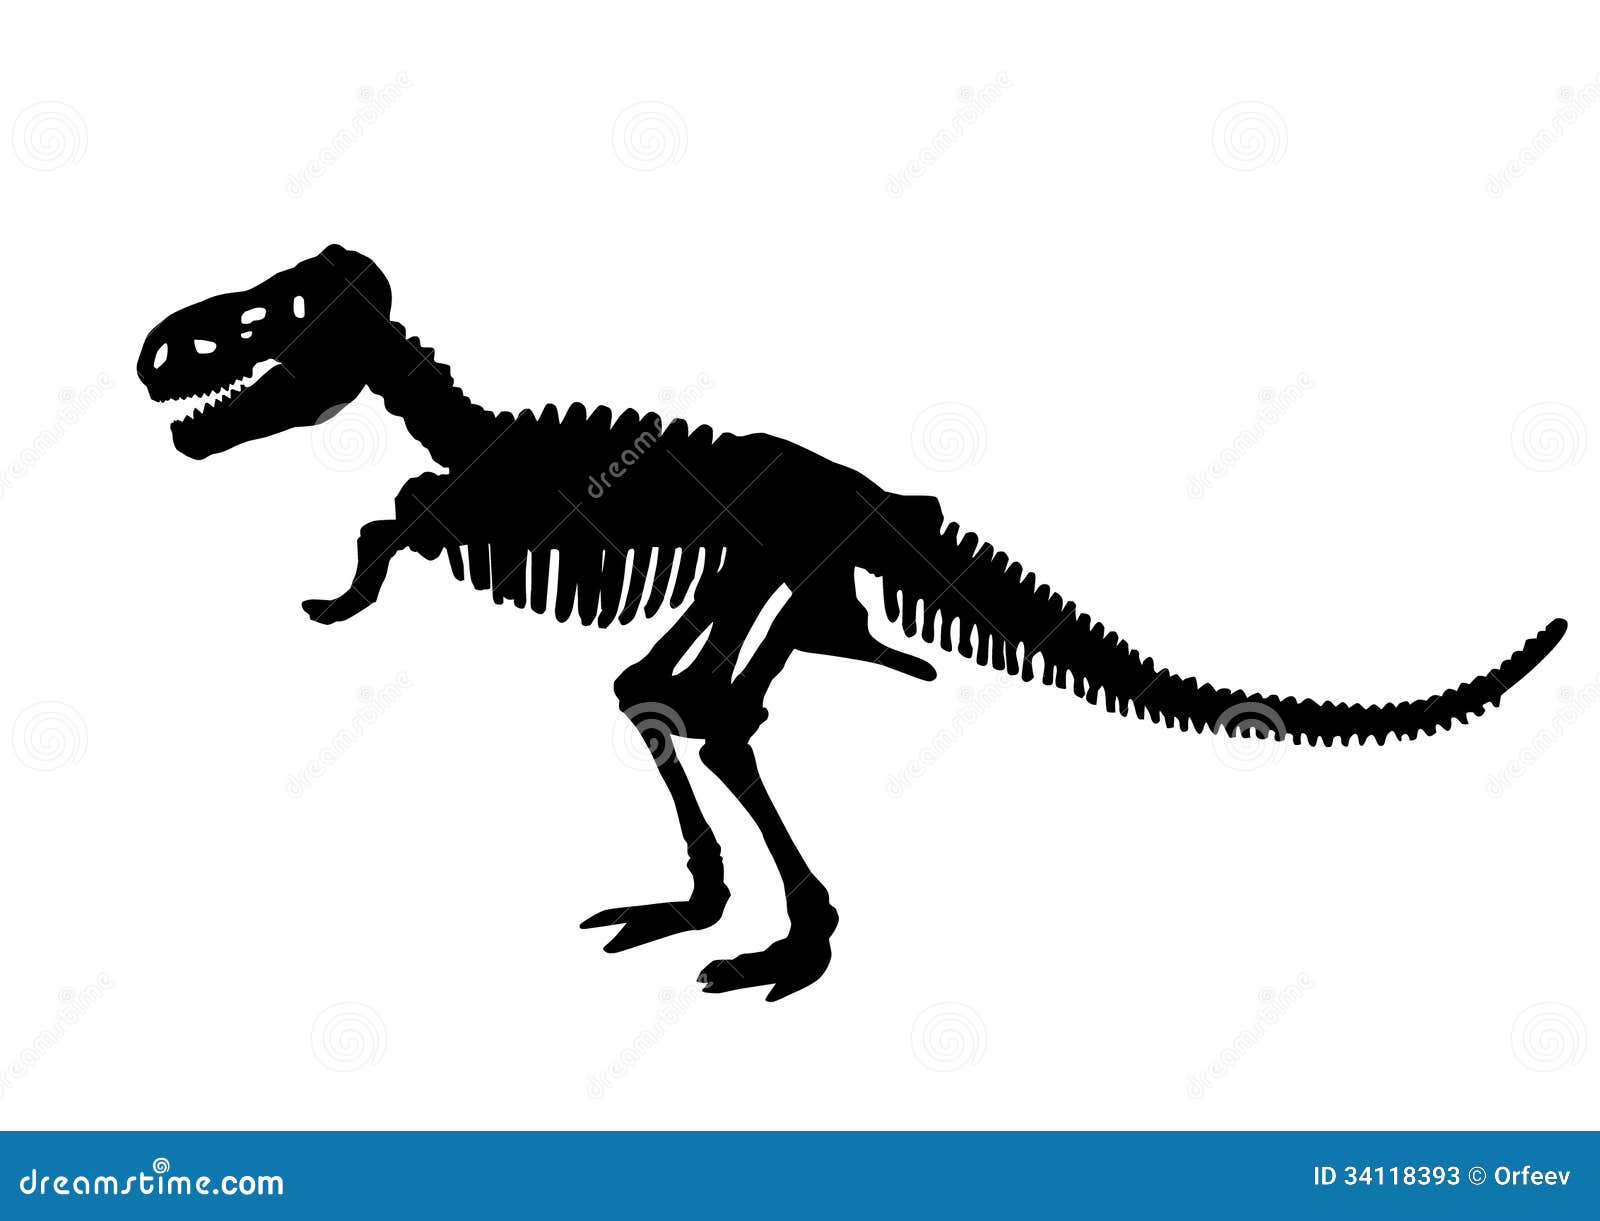 Dinosaur Skeleton Silhouette Stock Vector Illustration Of Fearsome Head 34118393